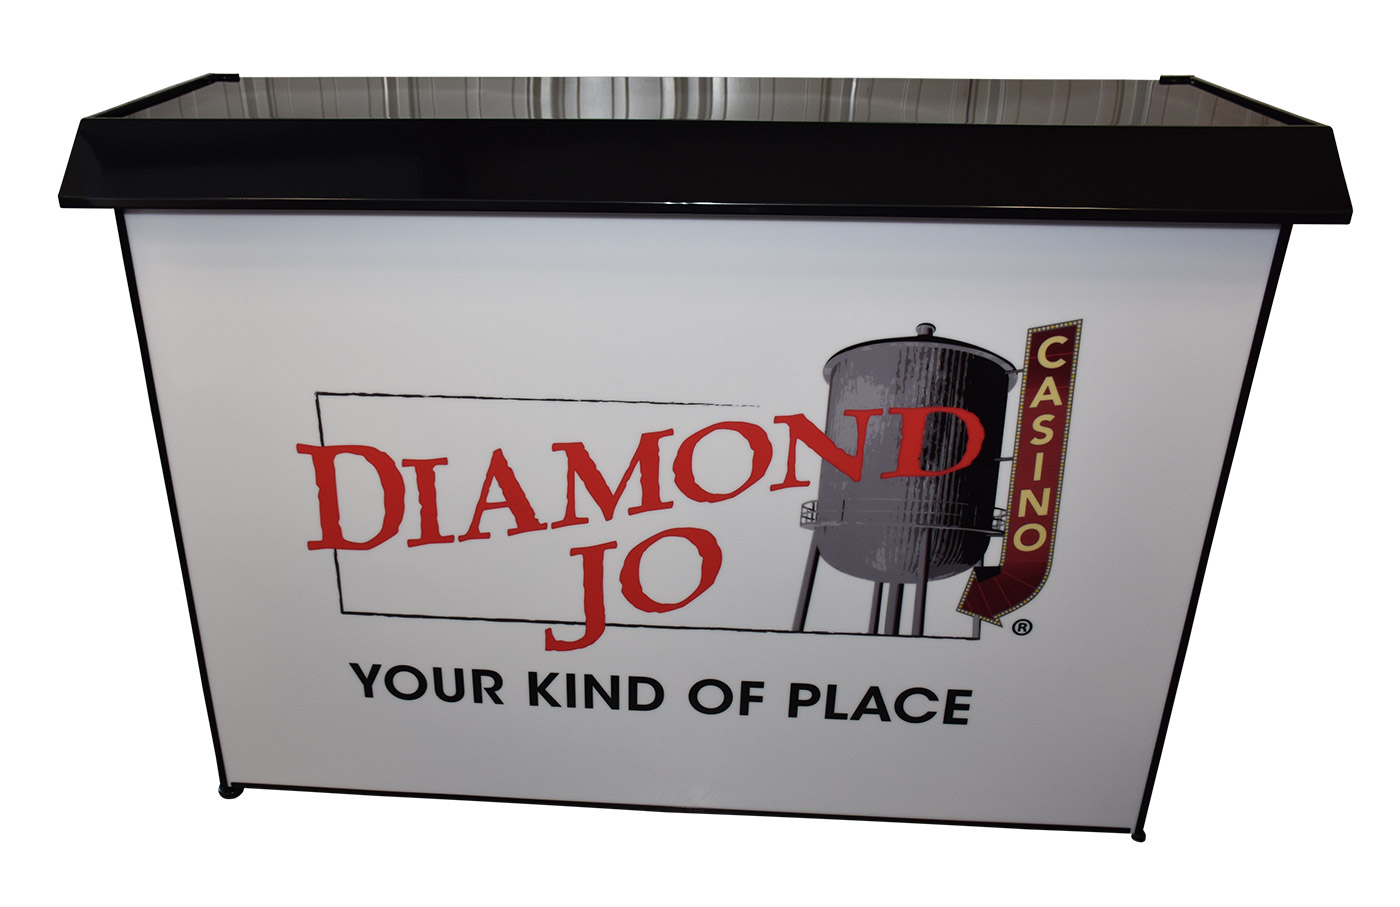 Professional Portable Bar - Diamond Jo Casino